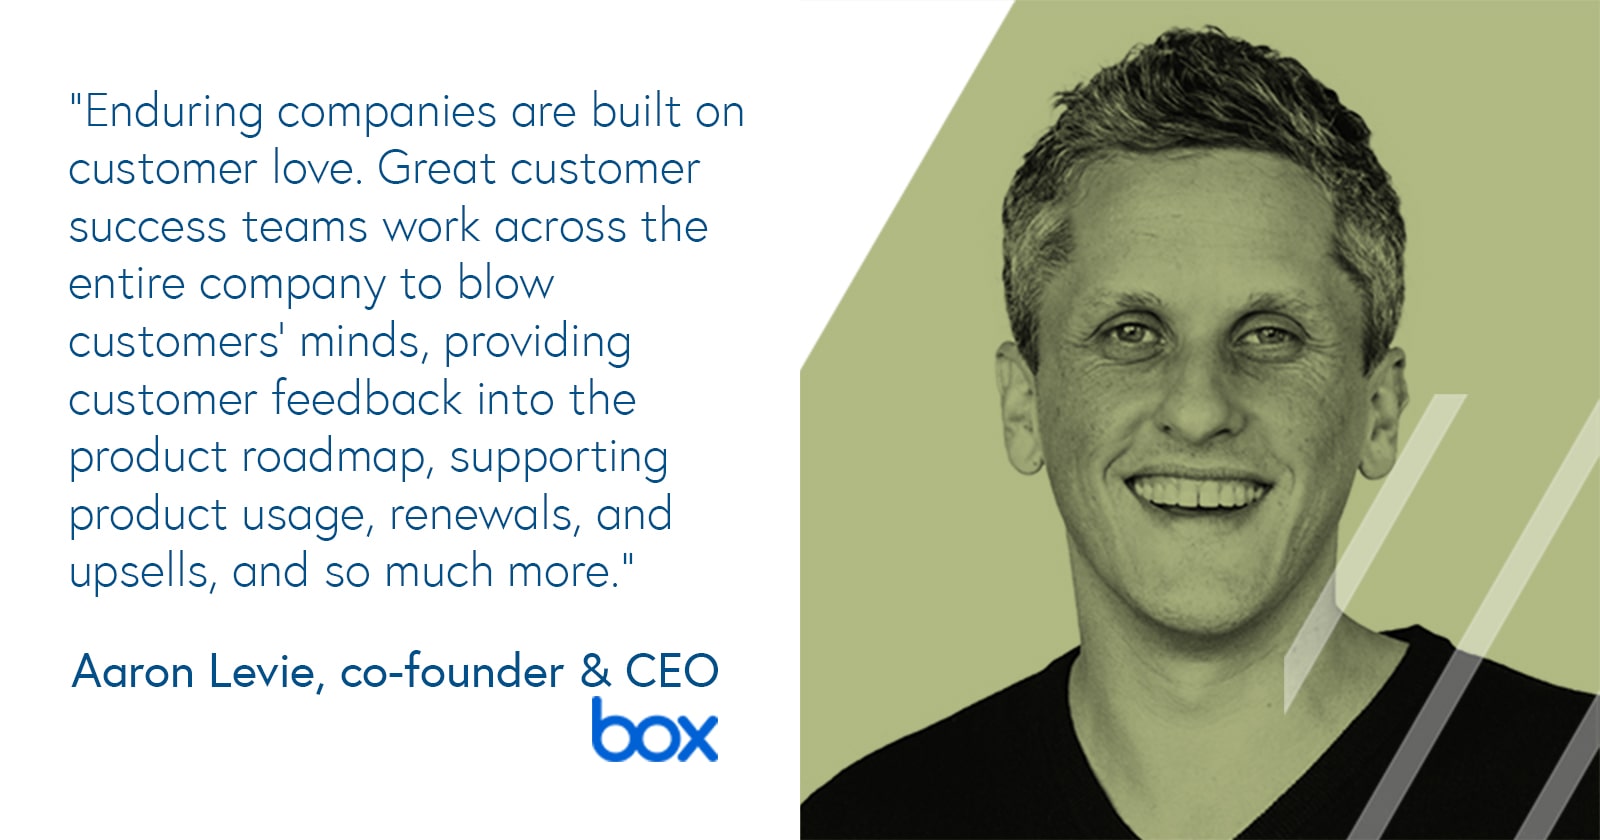 Aaron Levie, CEO of Box on customer love and customer success 